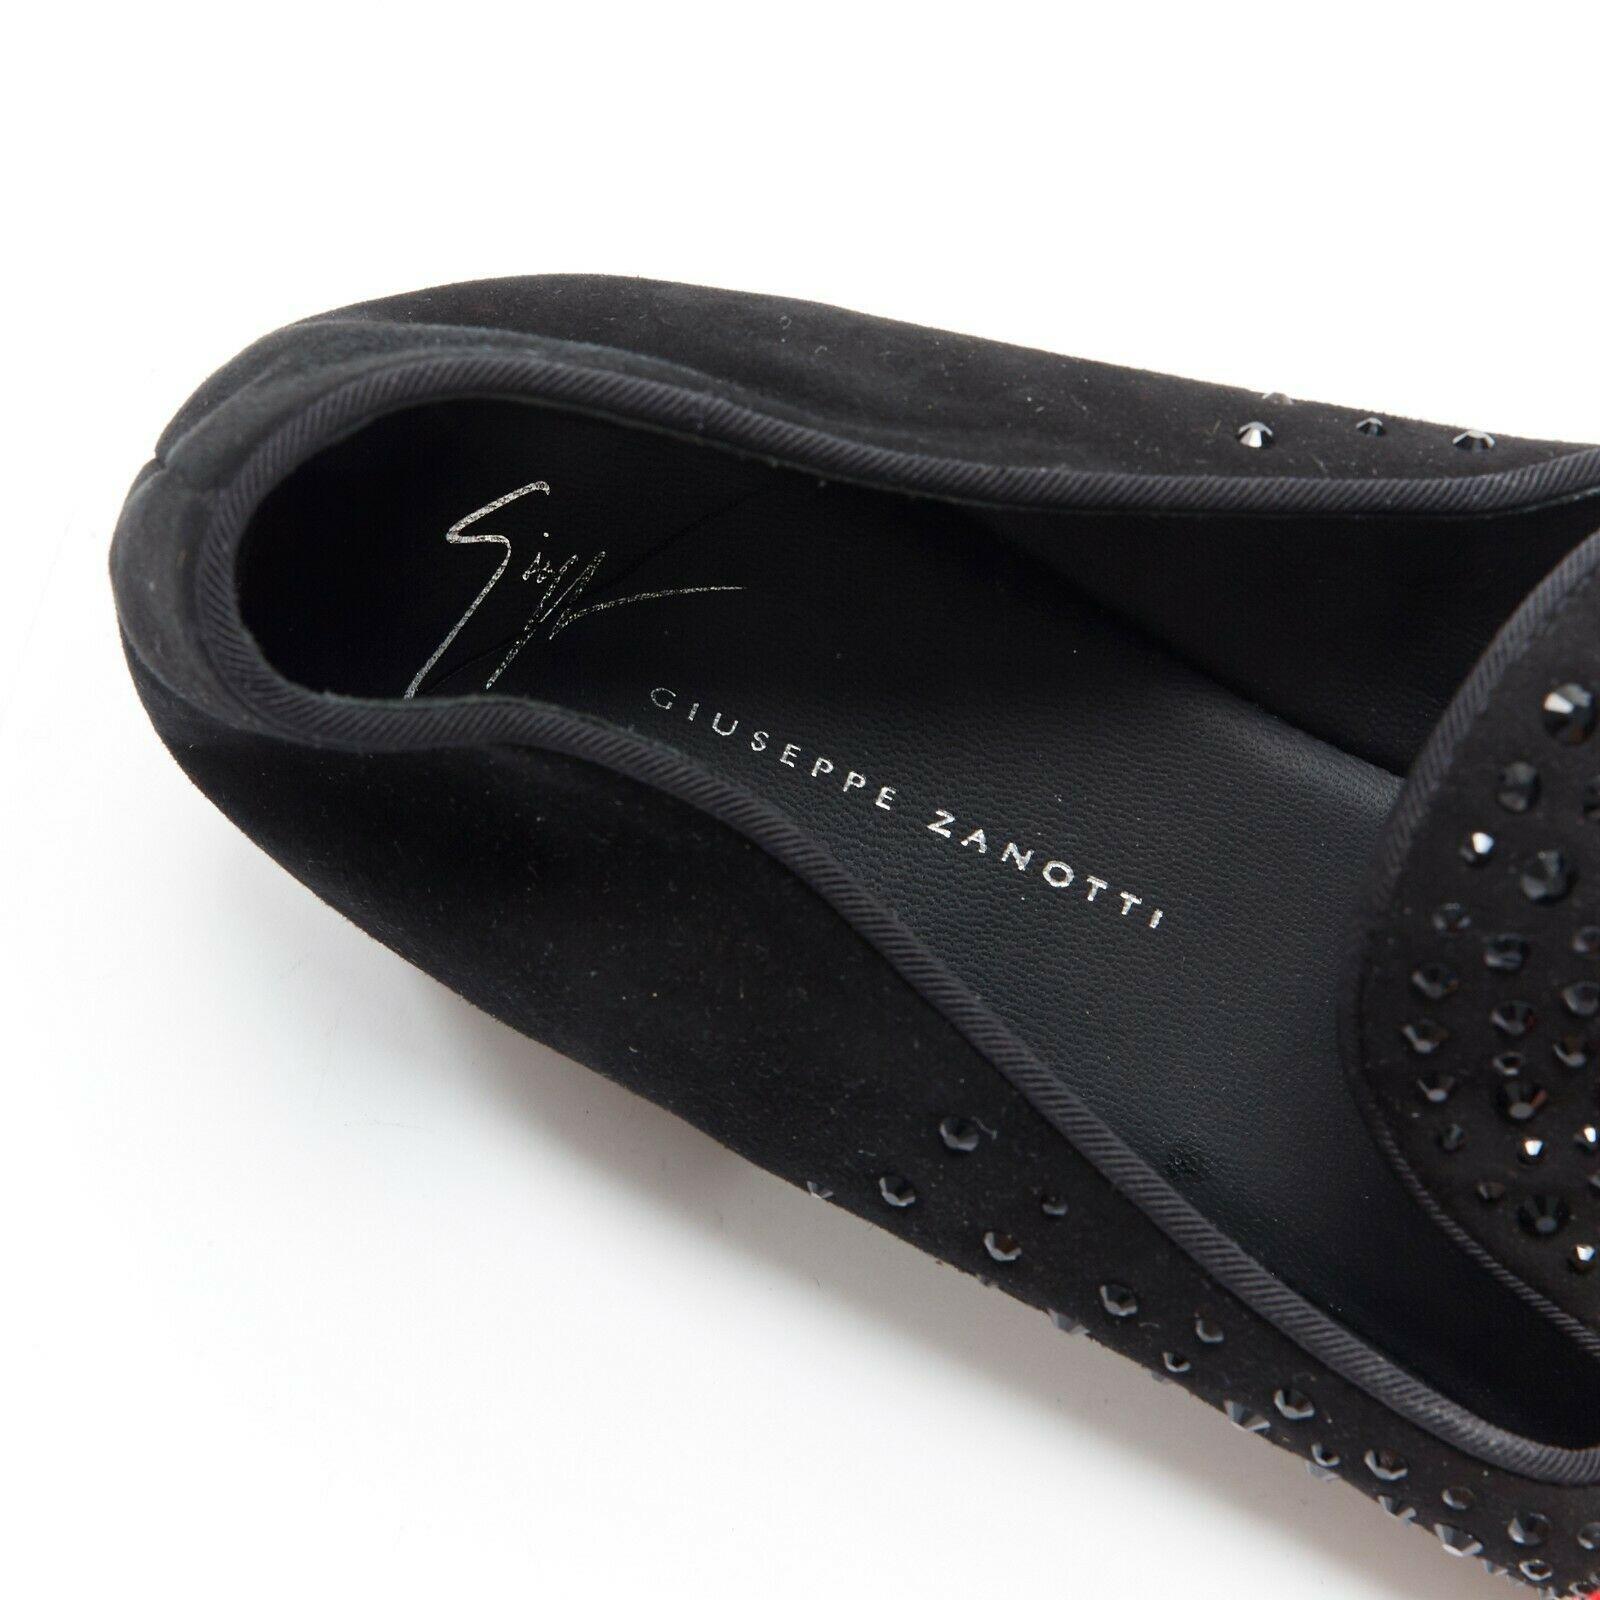 GIUSEPPE ZANOTTI 2019 Bam crystal embellished pop art black suede loafer EU44 4